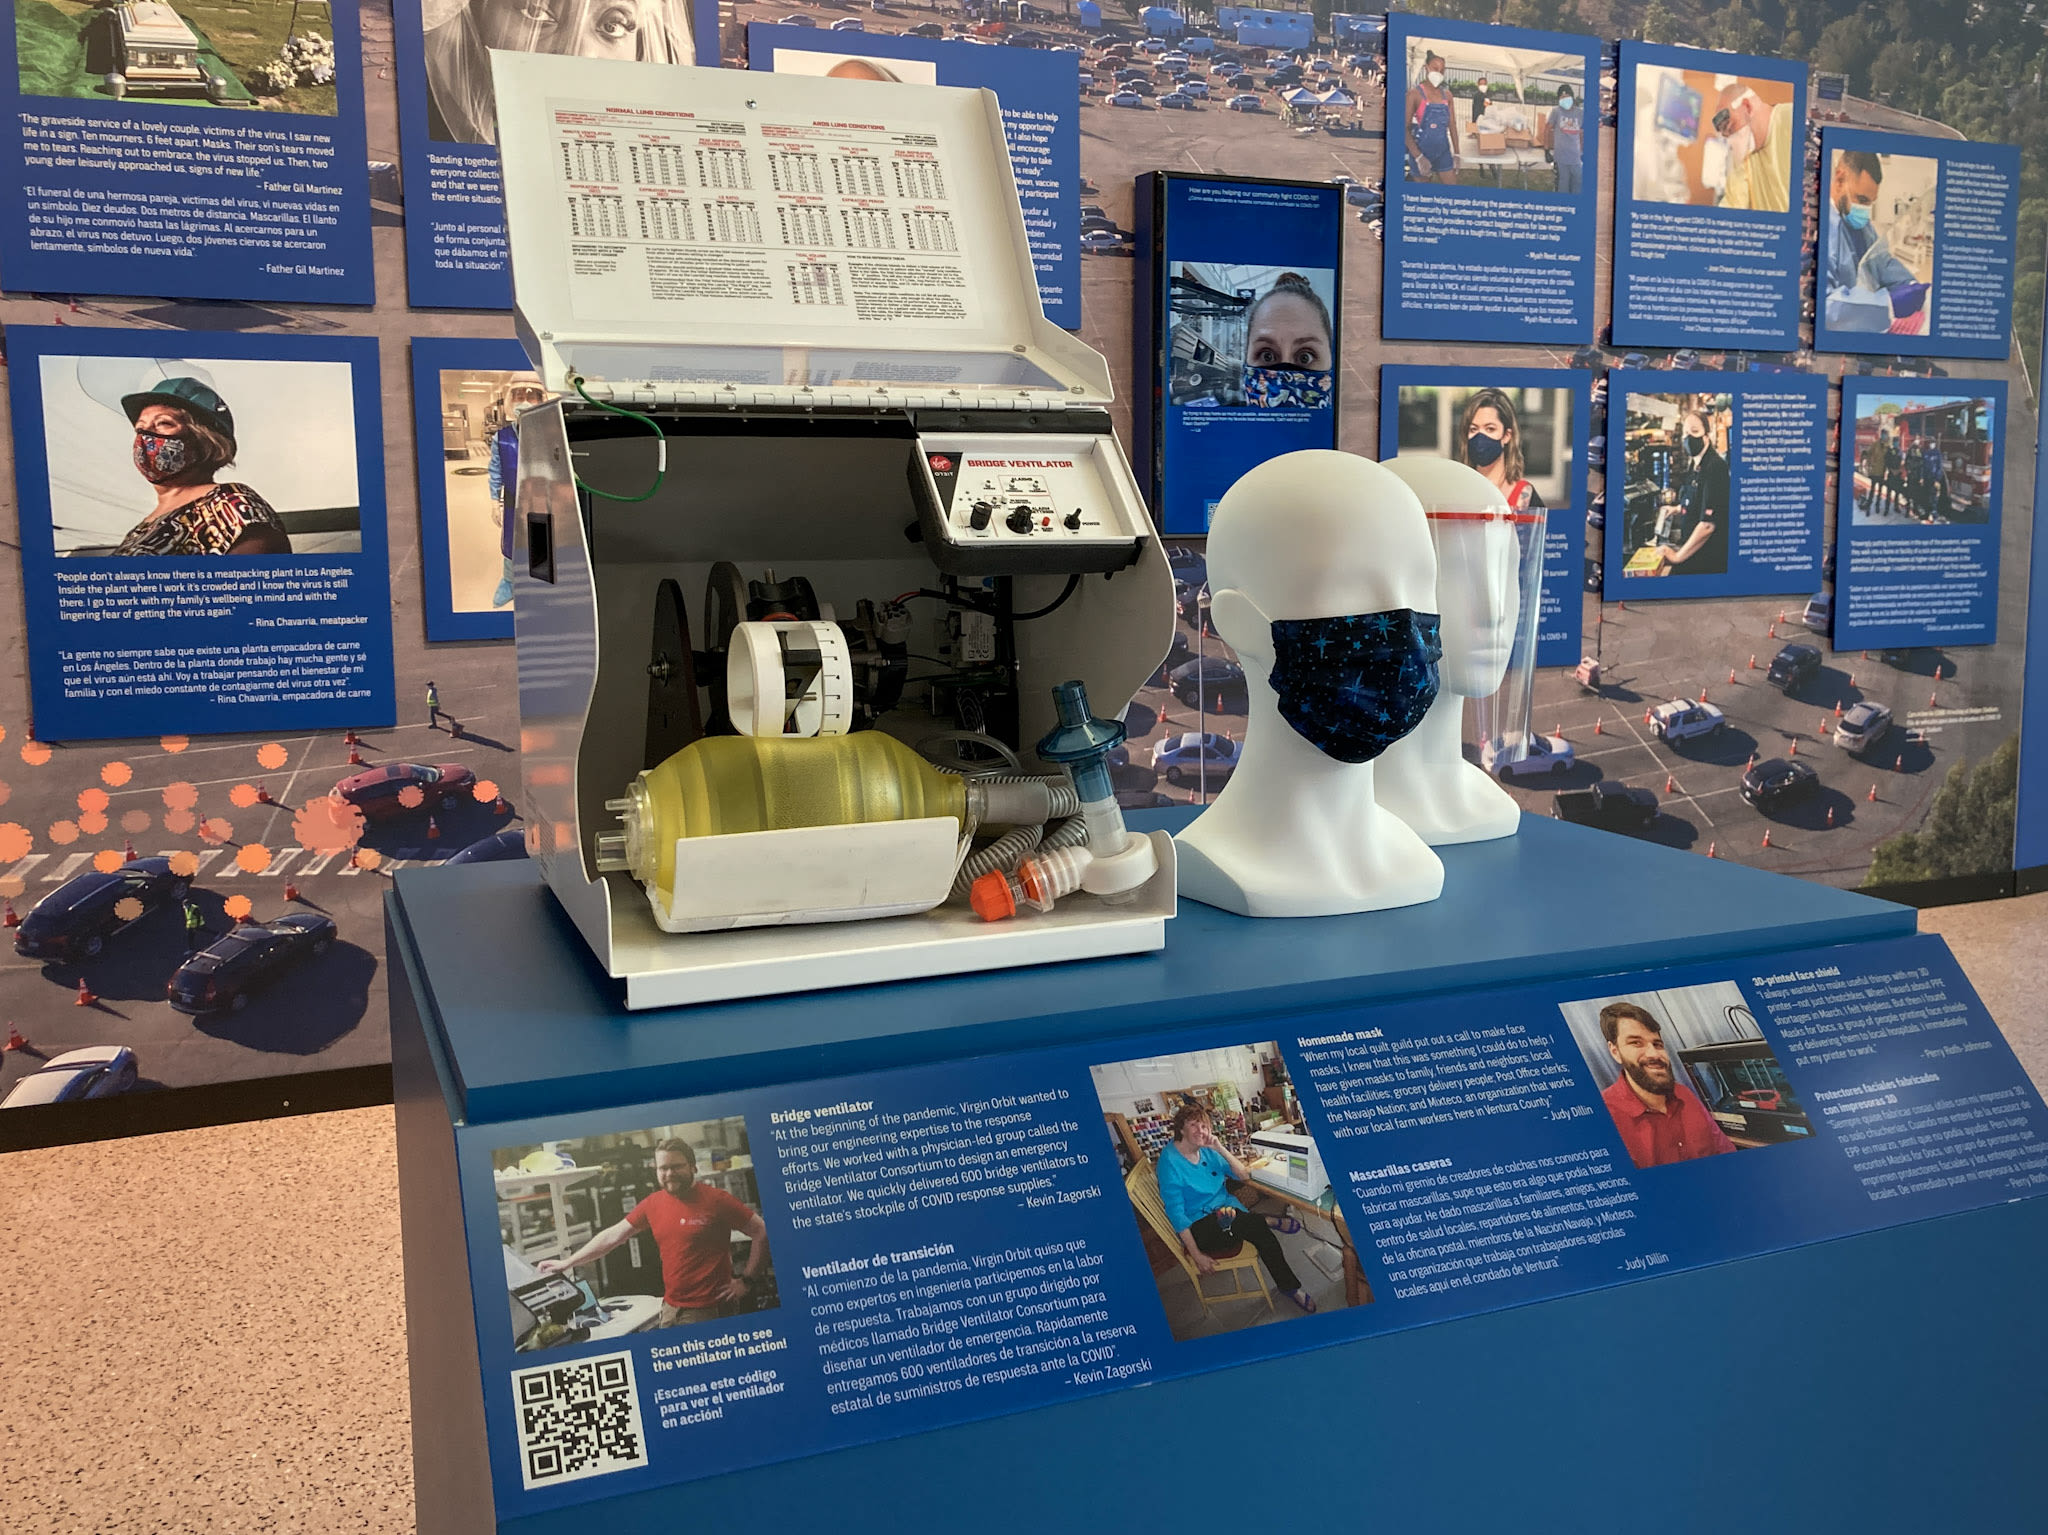 Virgin Orbit's bridge ventilator on display at California Science Center